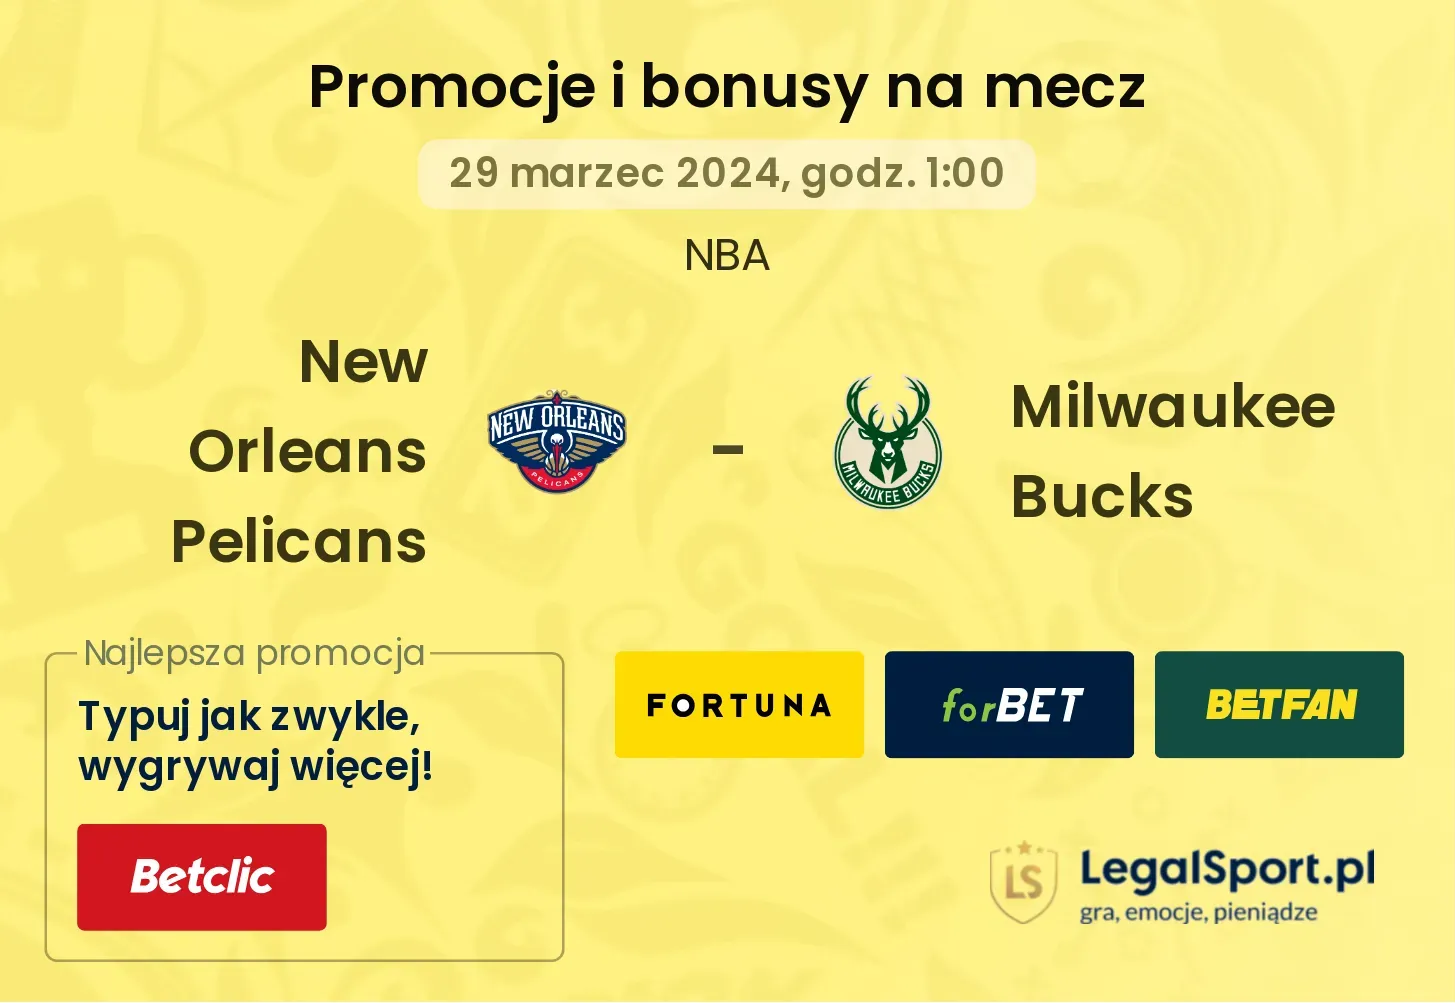 New Orleans Pelicans - Milwaukee Bucks $s